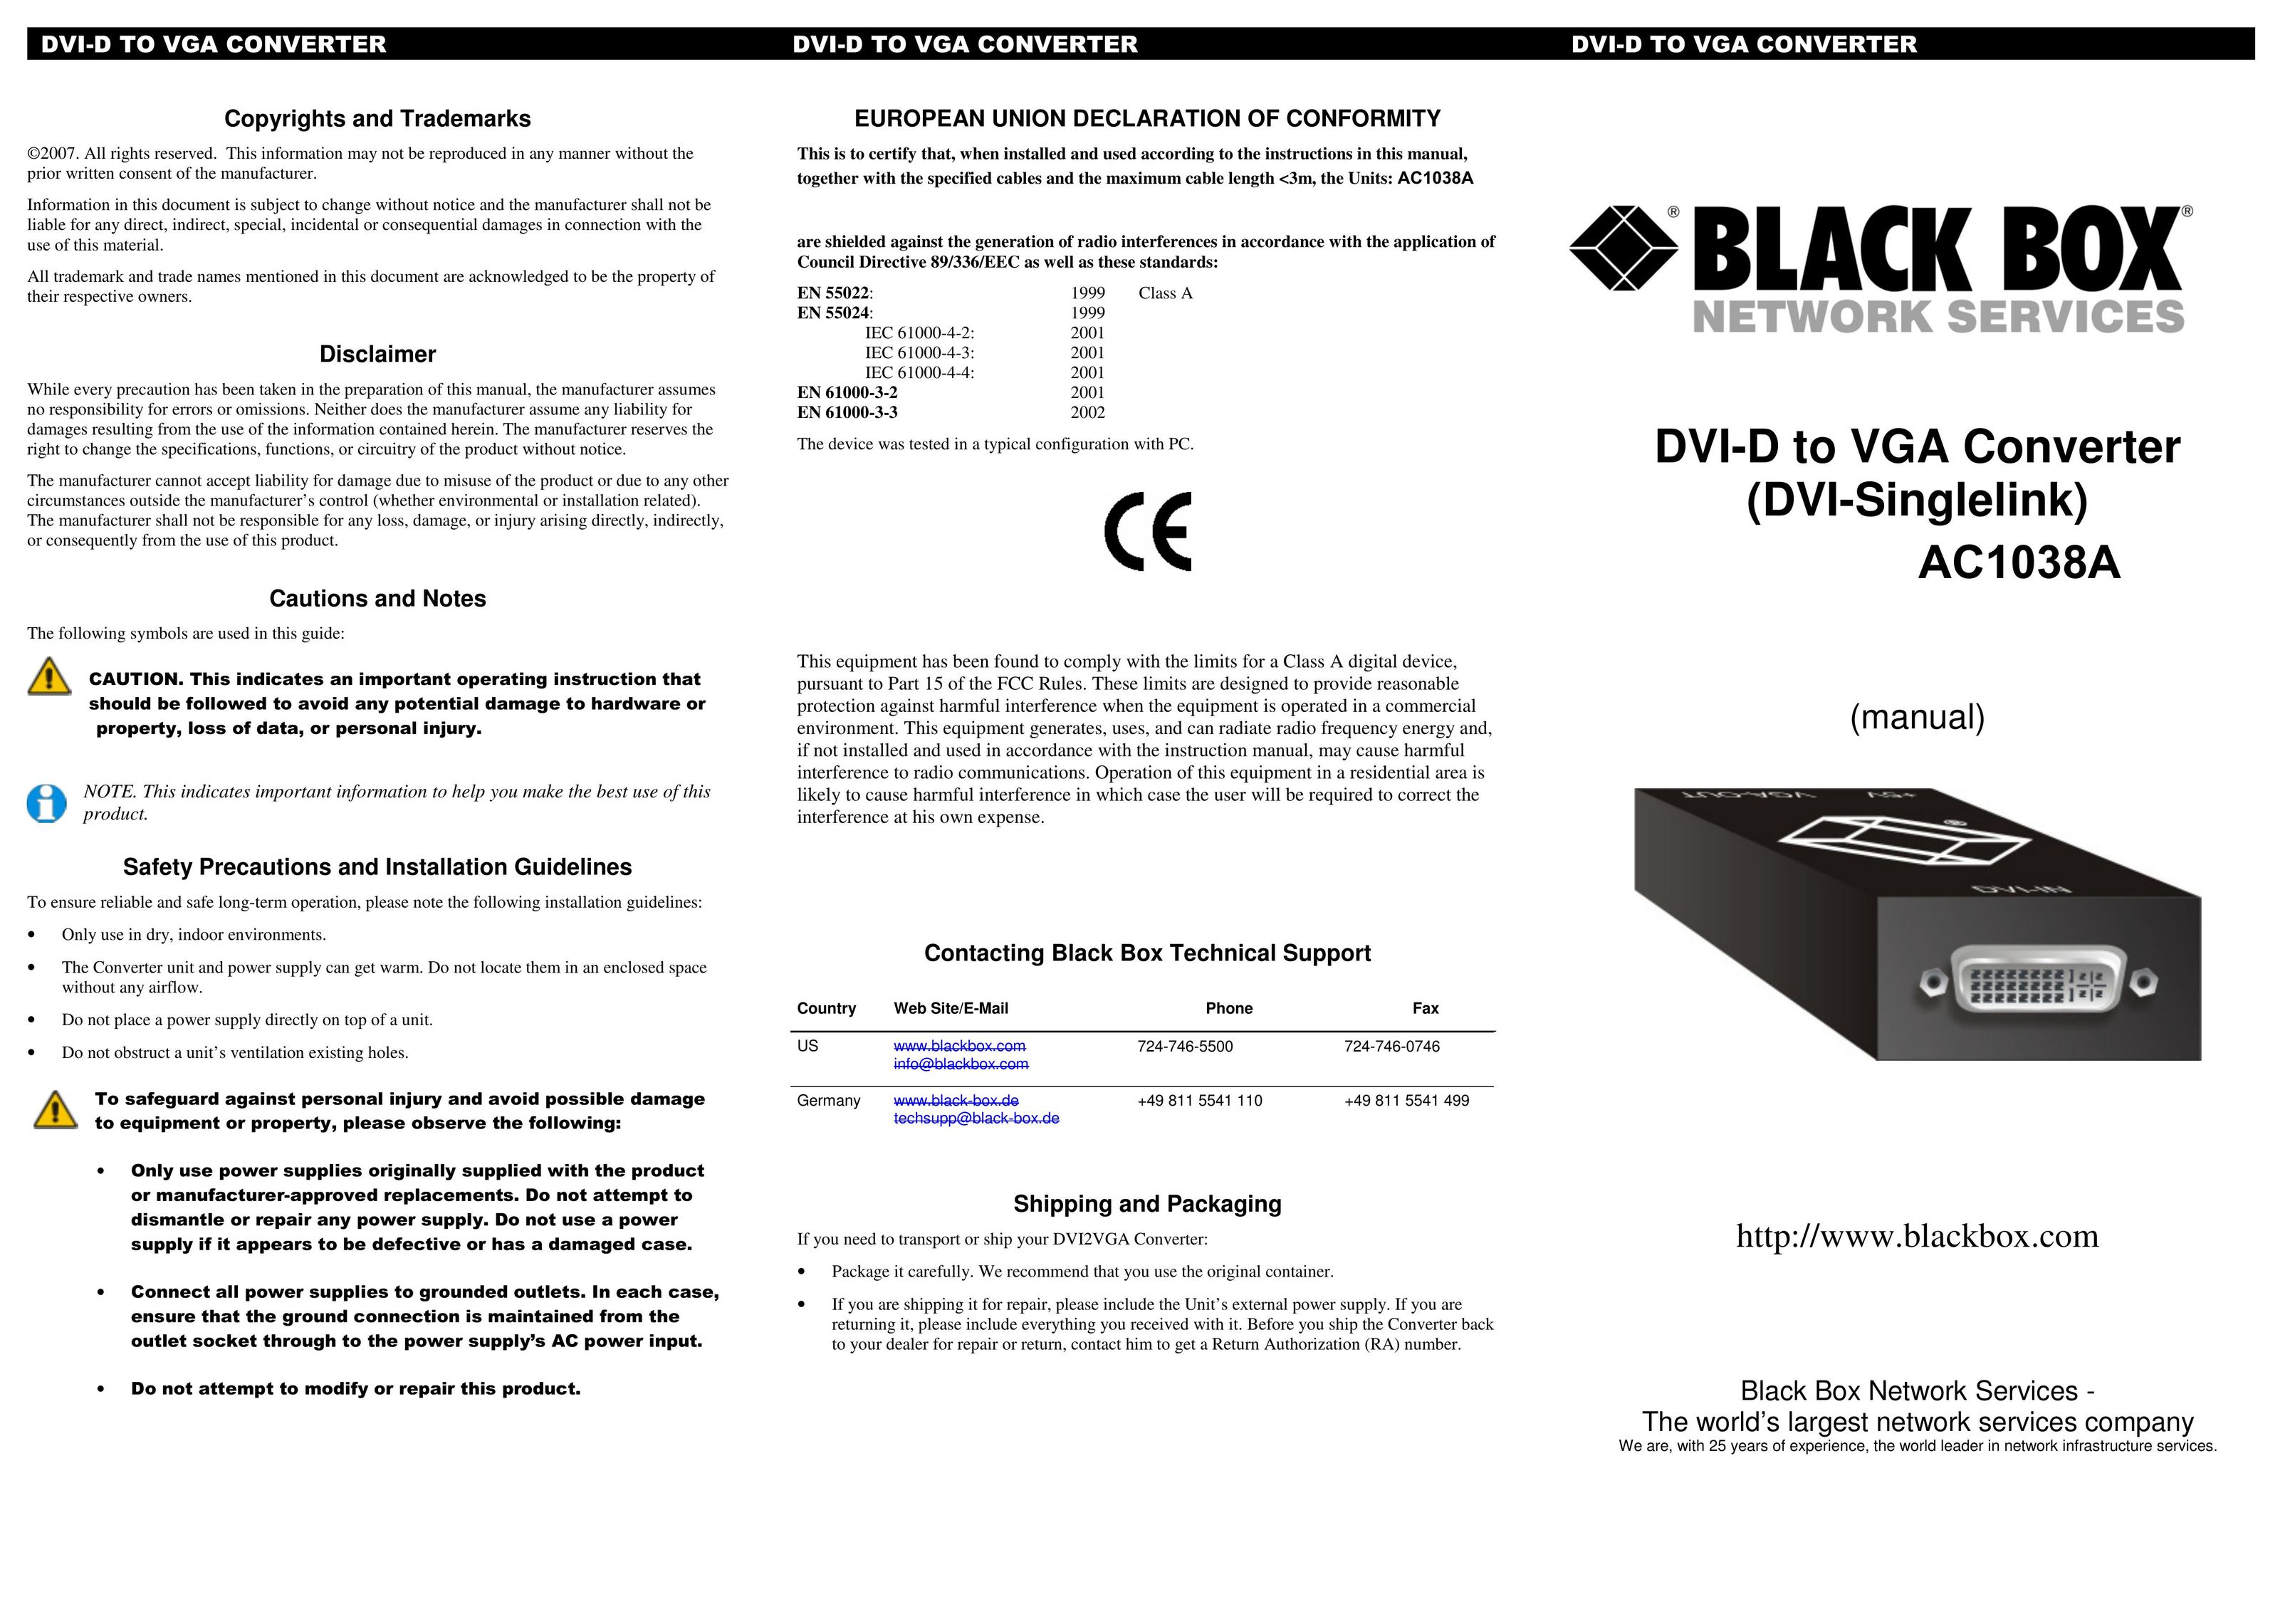 Black Box DVI-Singlelink AC1038A TV Converter Box User Manual